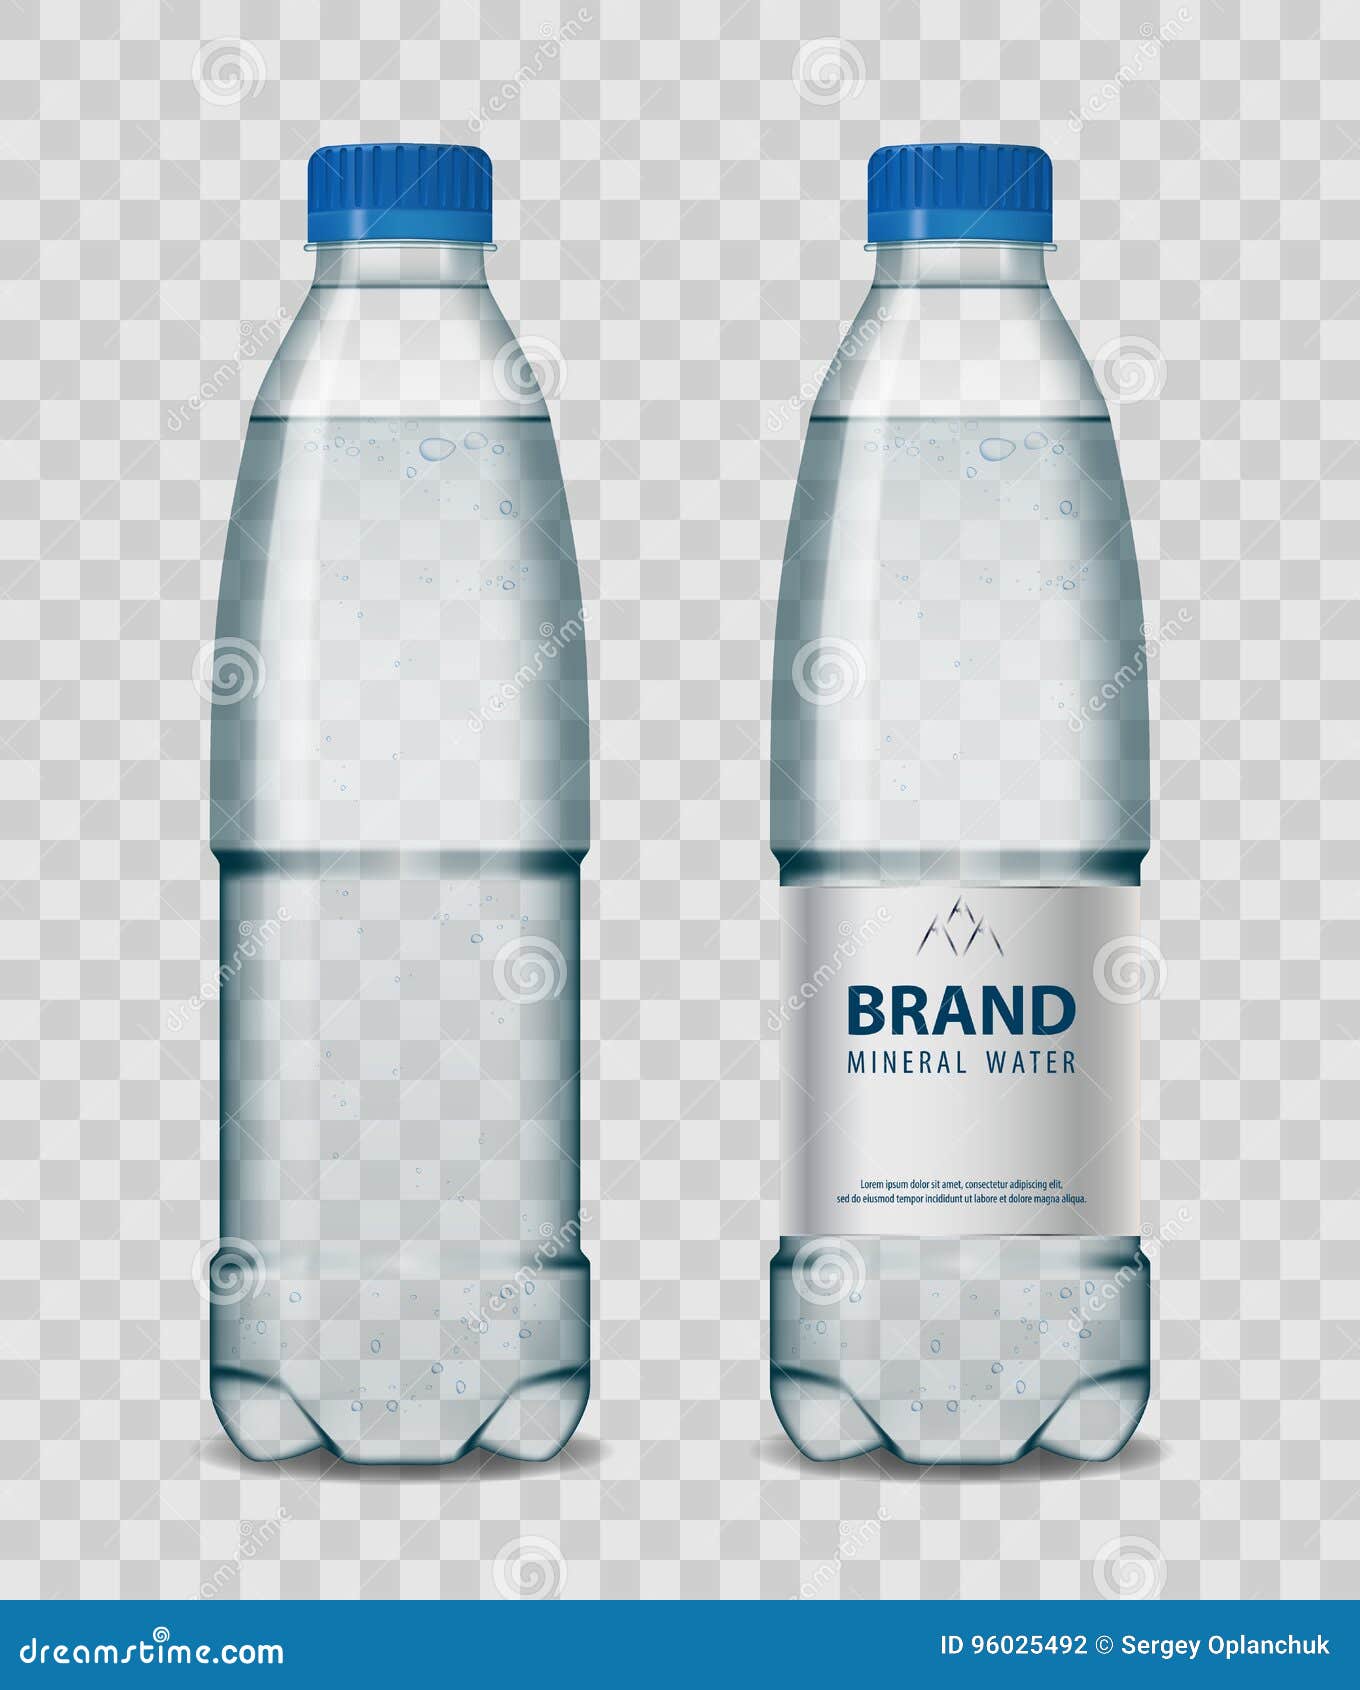 https://thumbs.dreamstime.com/z/plastic-bottle-mineral-water-blue-cap-transparent-background-realistic-bottle-mockup-vector-illustration-eps-96025492.jpg